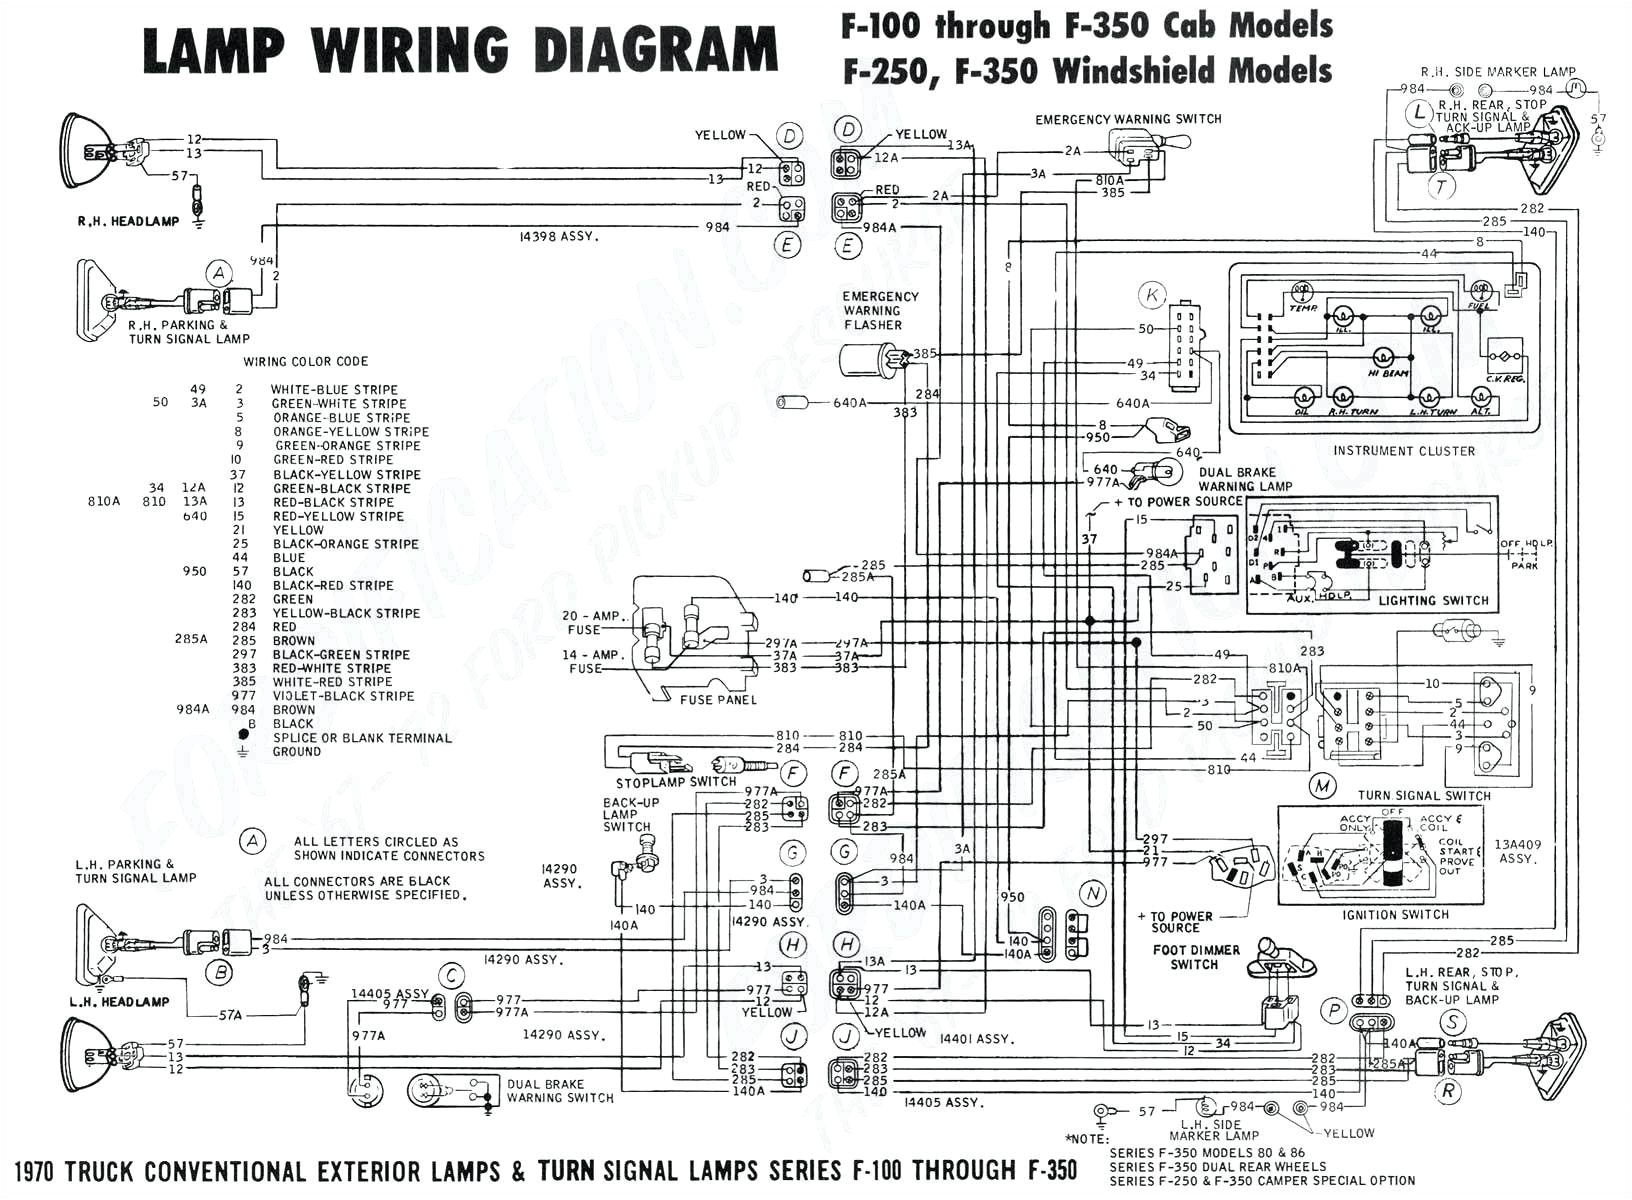 Airtex Fuel Pump Wiring Diagram 1985 Merkur Wiring Harness Wiring Diagram Used